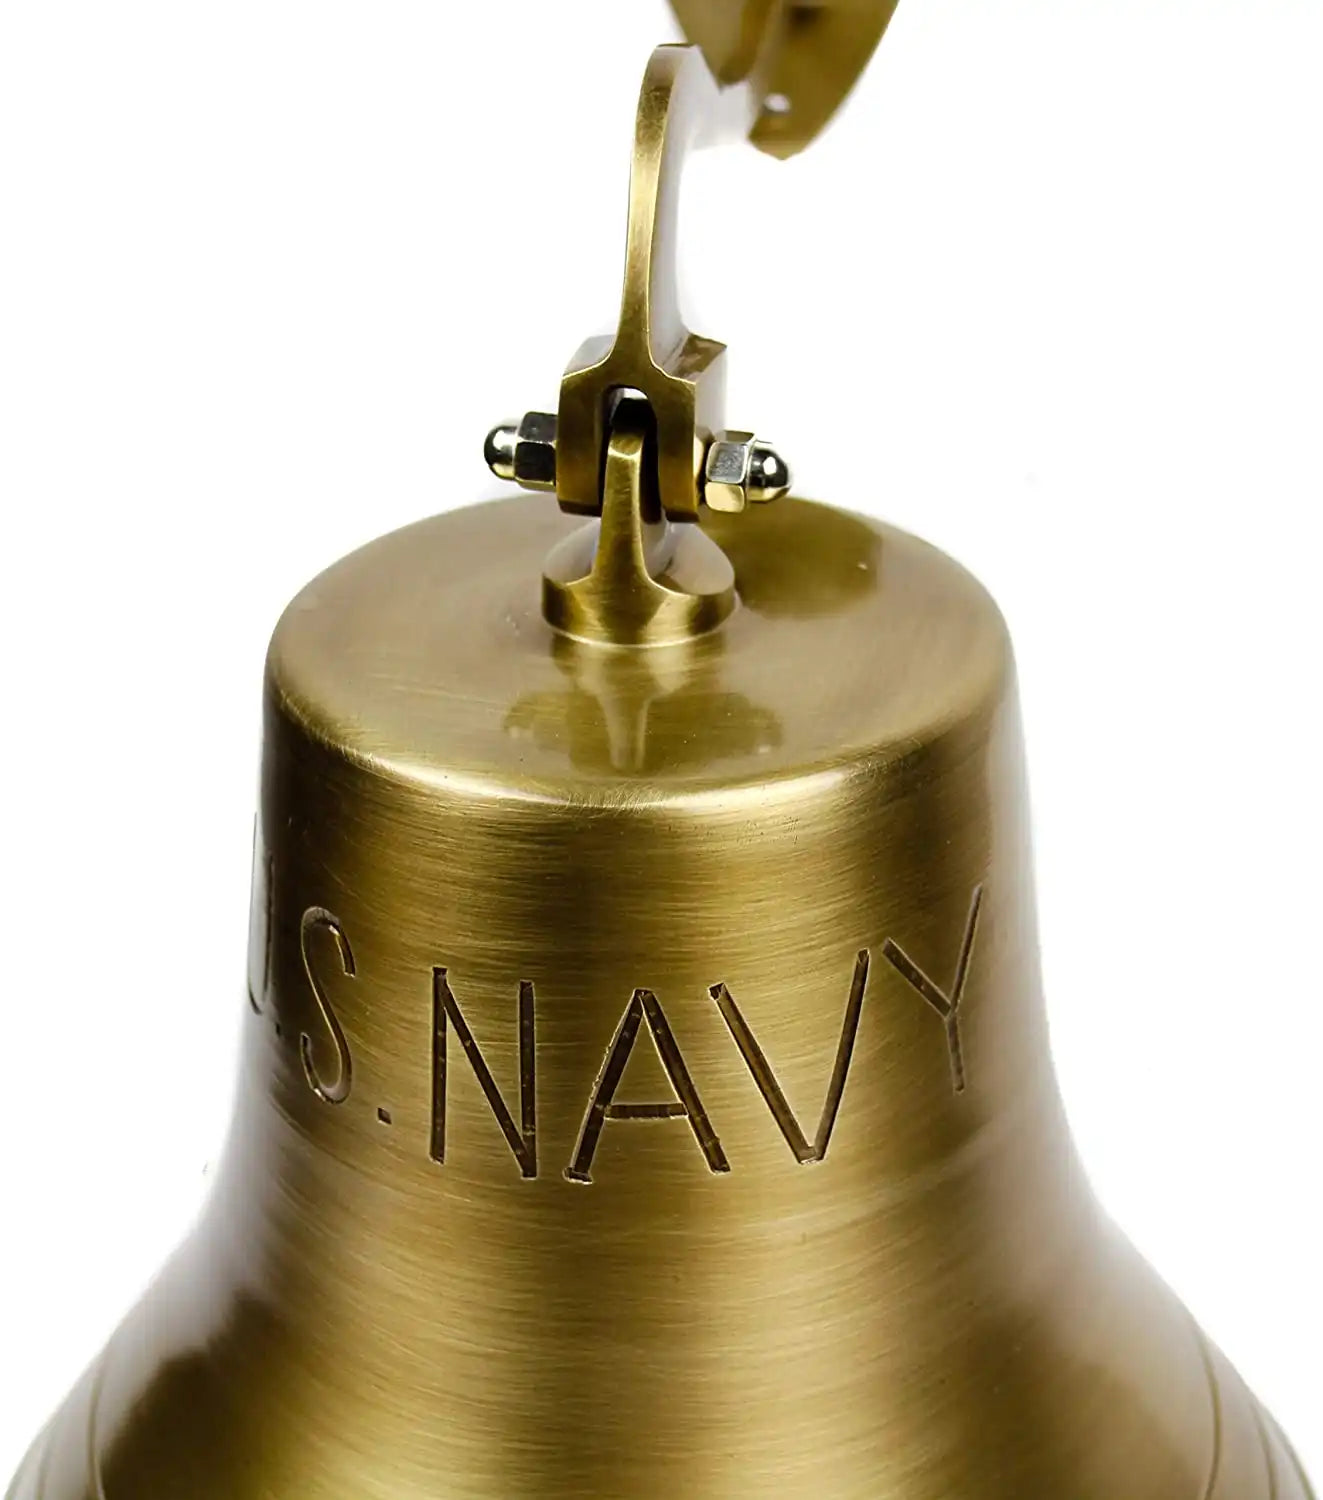 10" Brass US Navy Ship Bell - Nautical Replica Bell Door Bell Decorative Wall Mounted Bracket u.s. Navy New Design Round Gola Bell Navy Bell